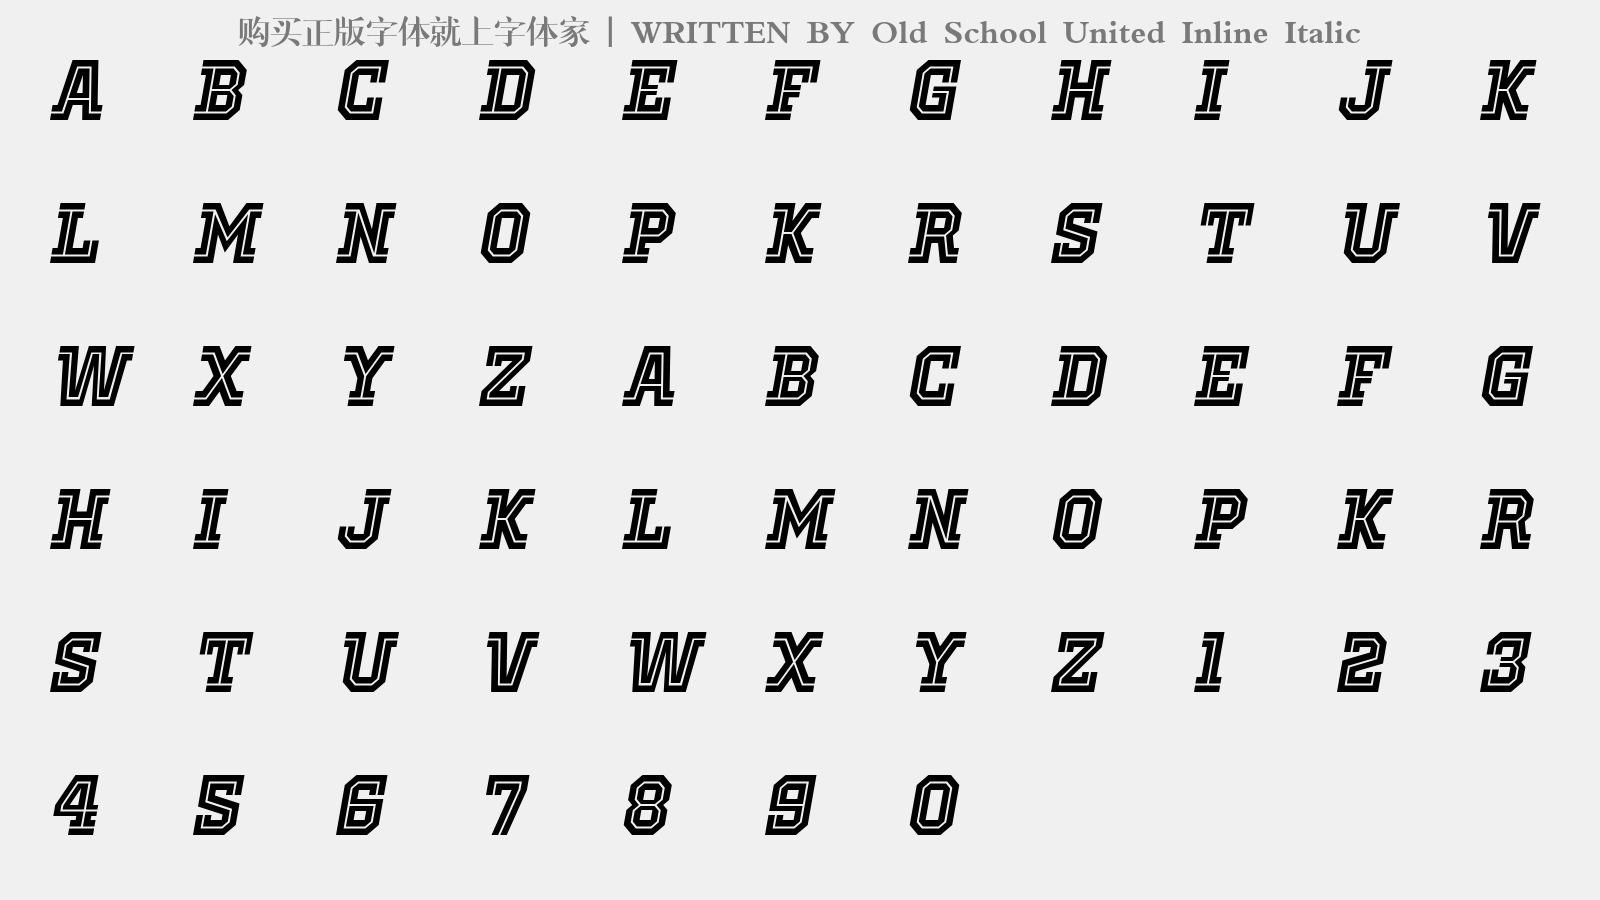 Old School United Inline Italic - 大写字母/小写字母/数字